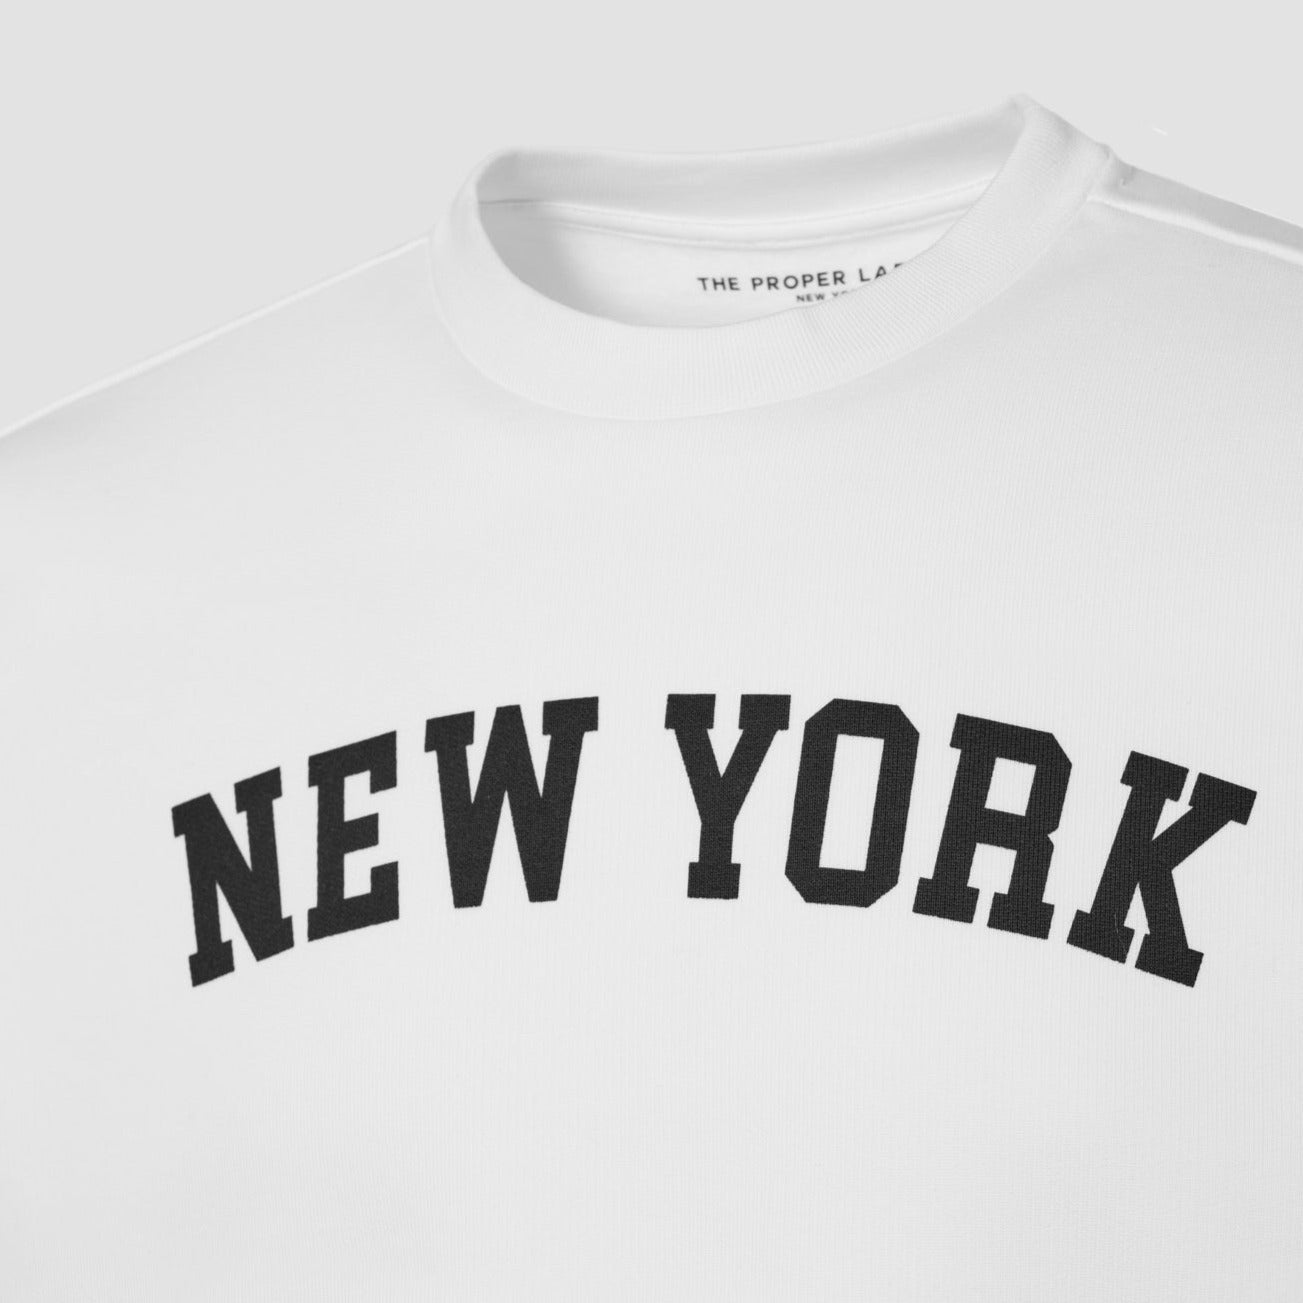 BY TPL ® New York Crewneck White - The Proper Label ™